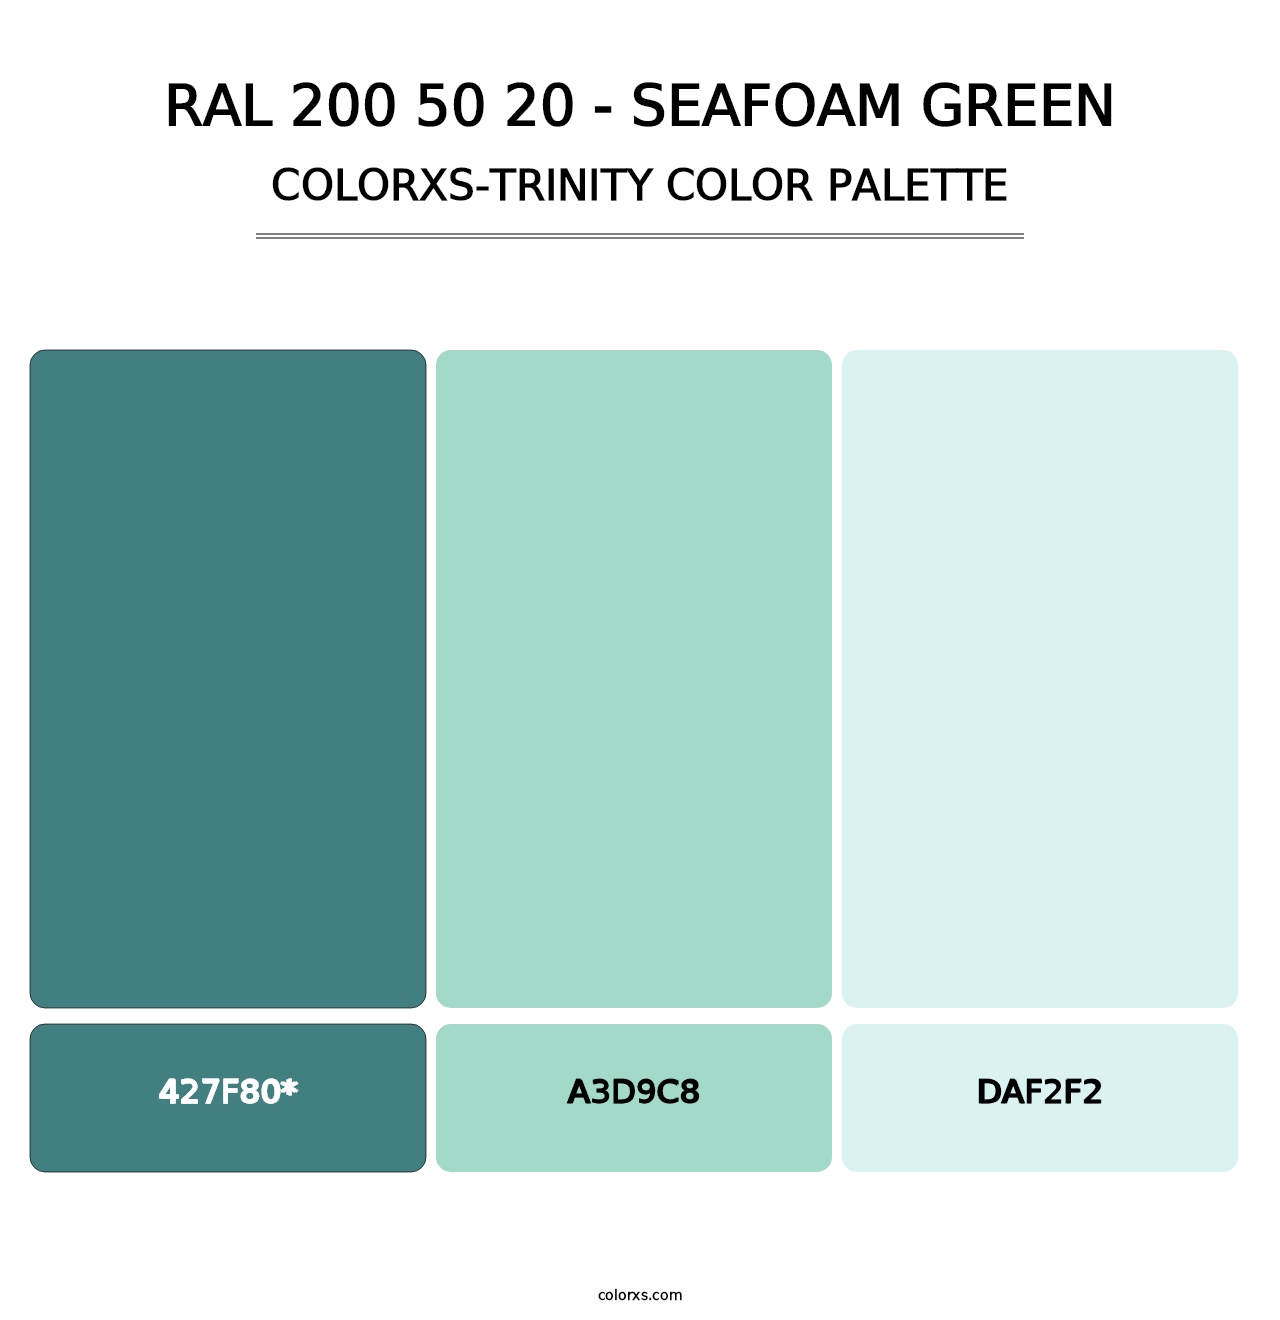 RAL 200 50 20 - Seafoam Green - Colorxs Trinity Palette